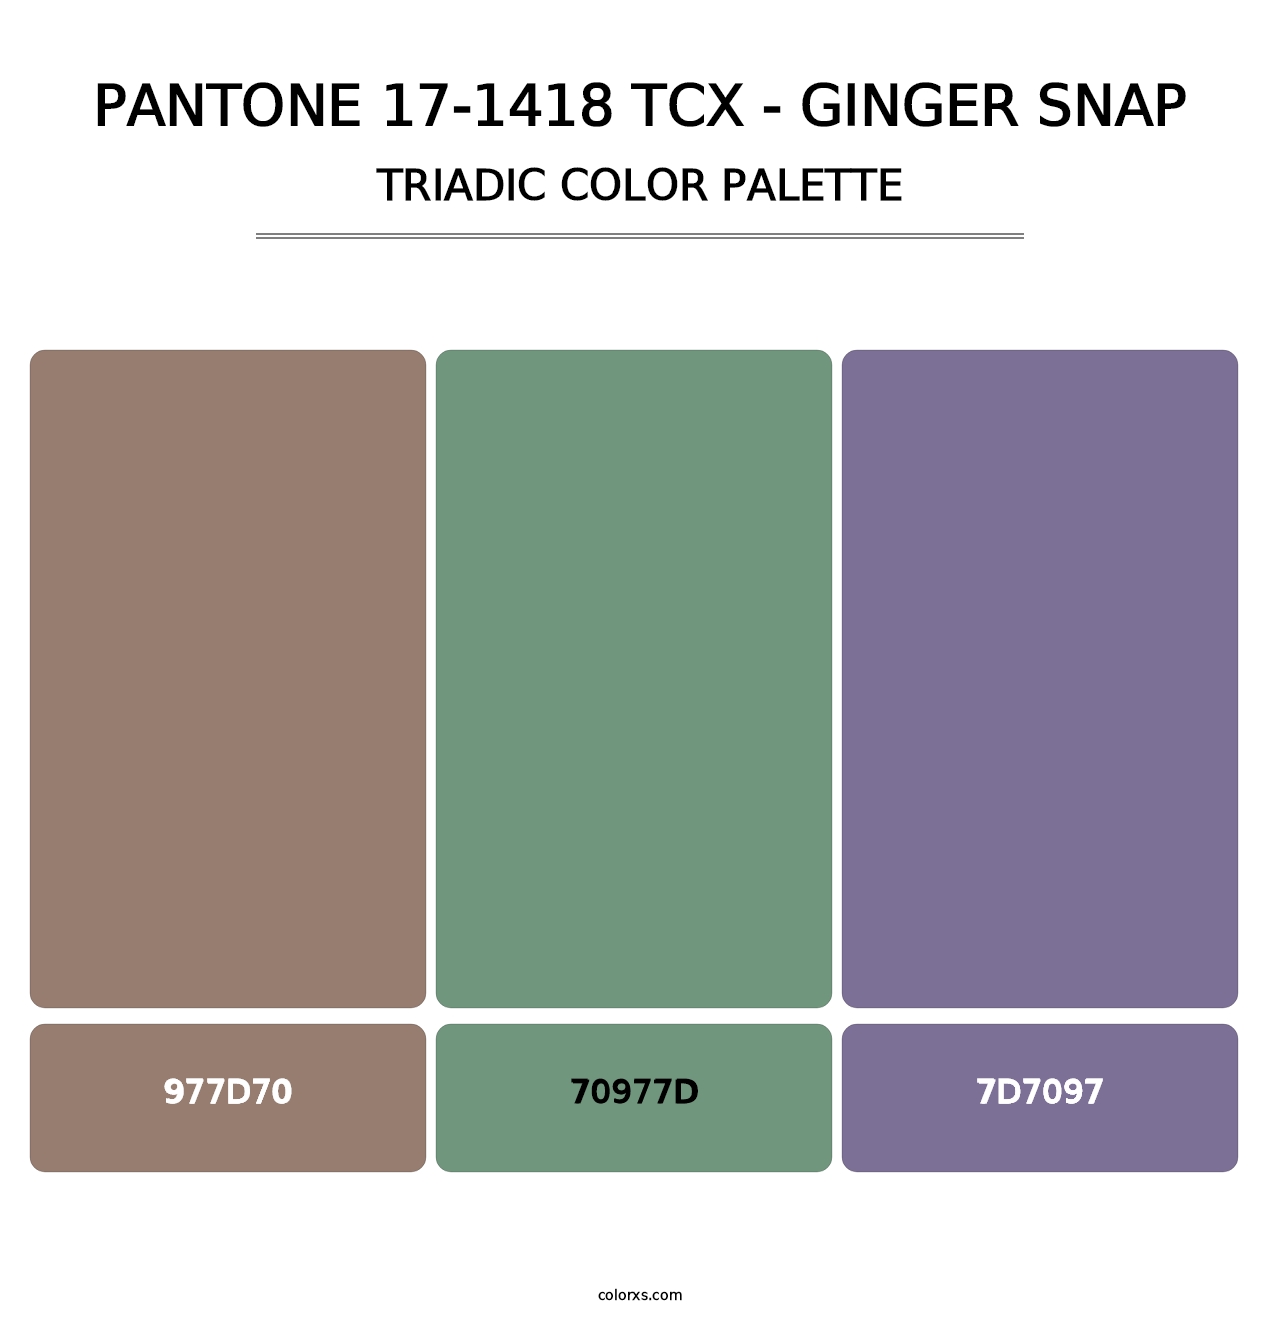 PANTONE 17-1418 TCX - Ginger Snap - Triadic Color Palette